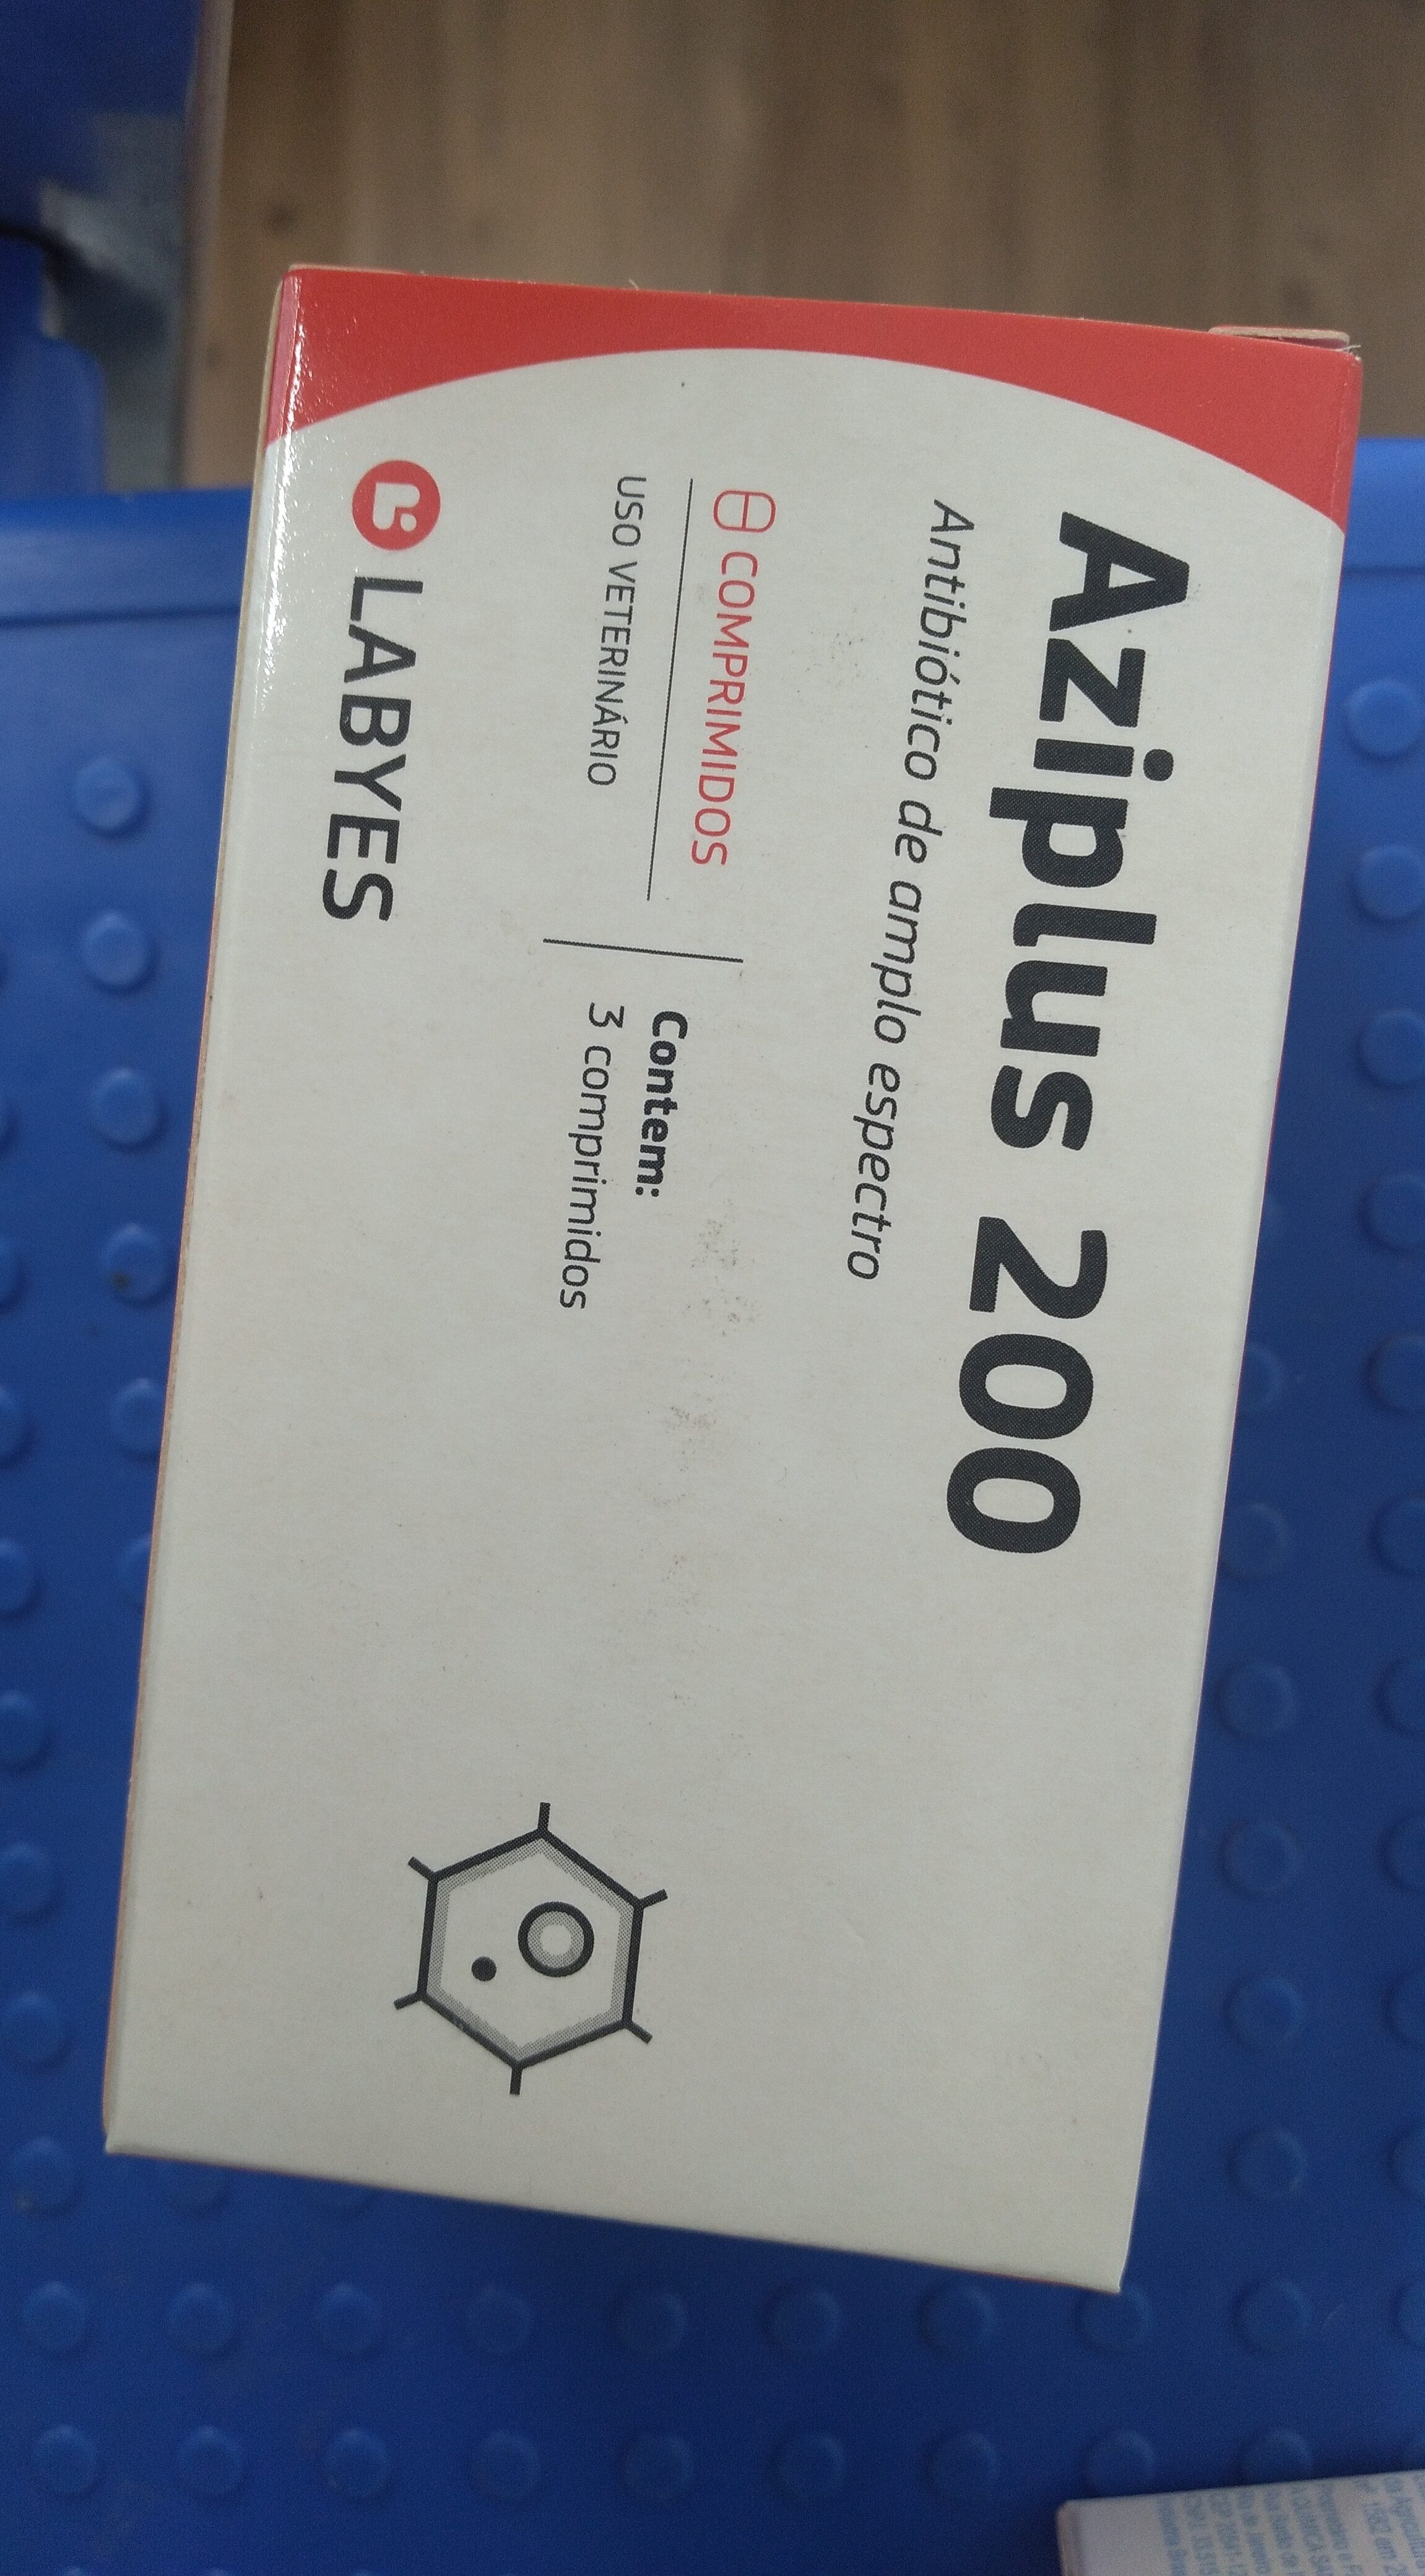 Aziplus 200 - Product - pt